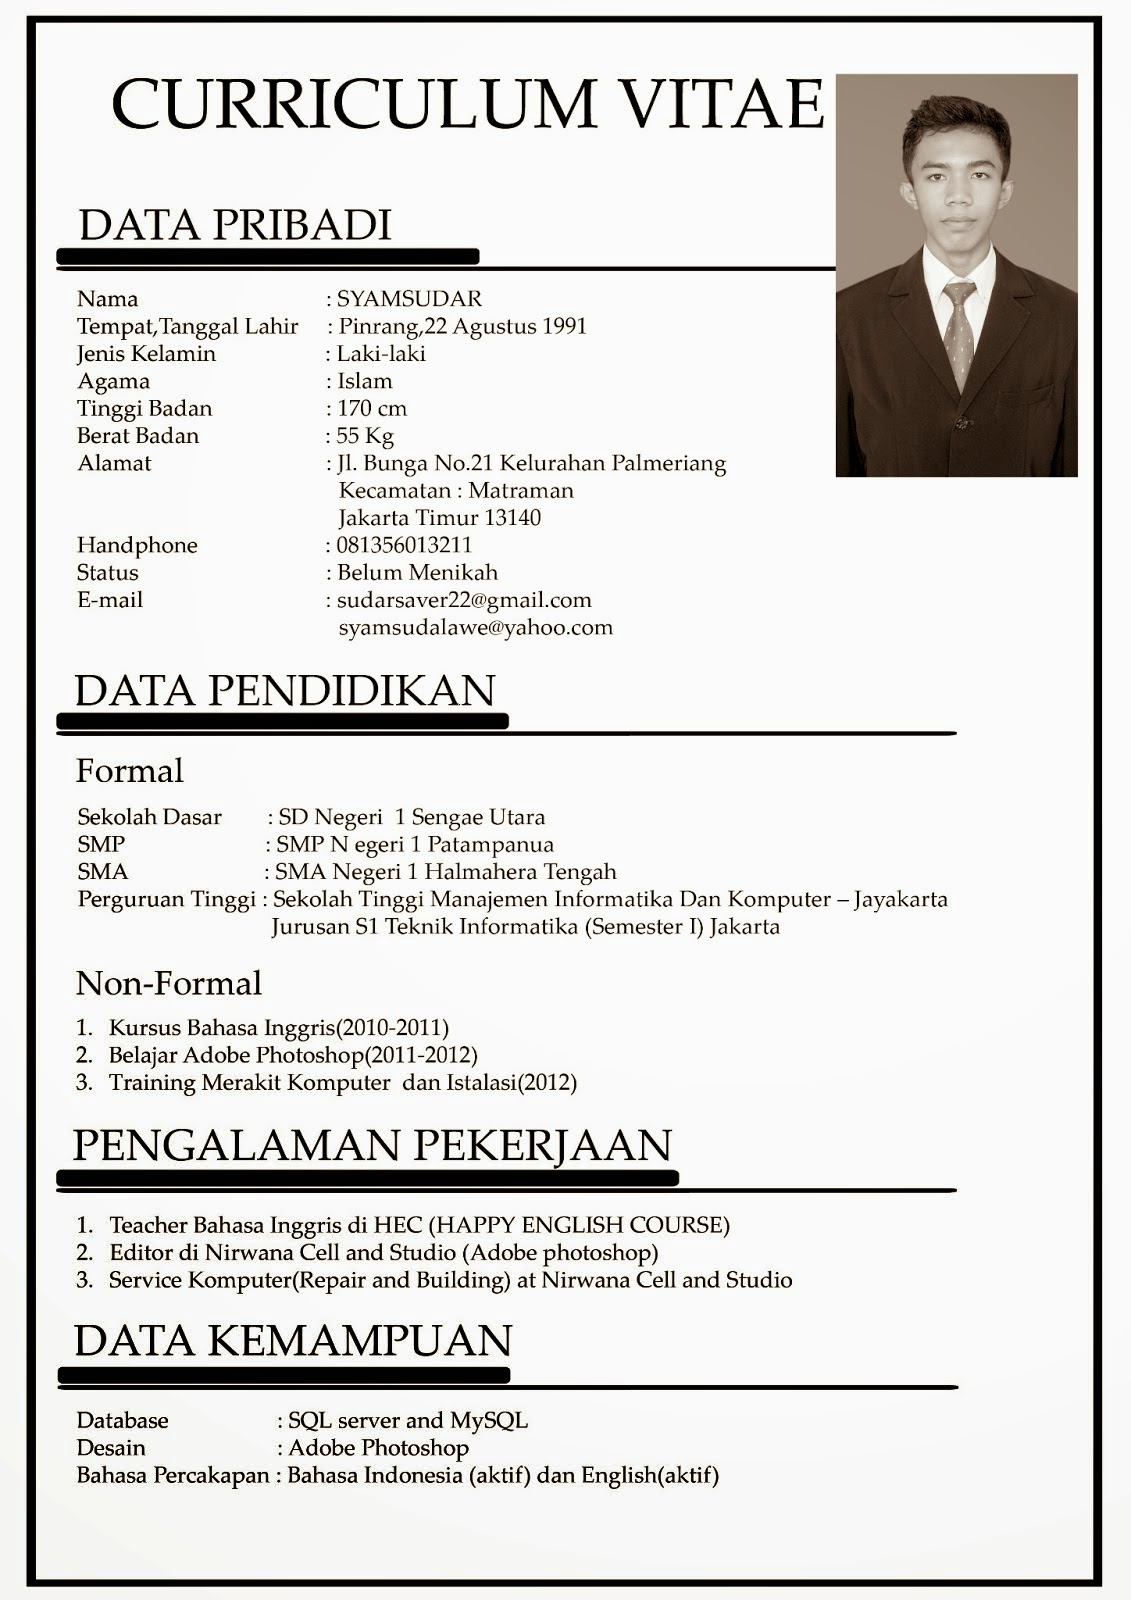 Contoh CV Lamaran Kerja Bahasa Indonesia dan Inggris